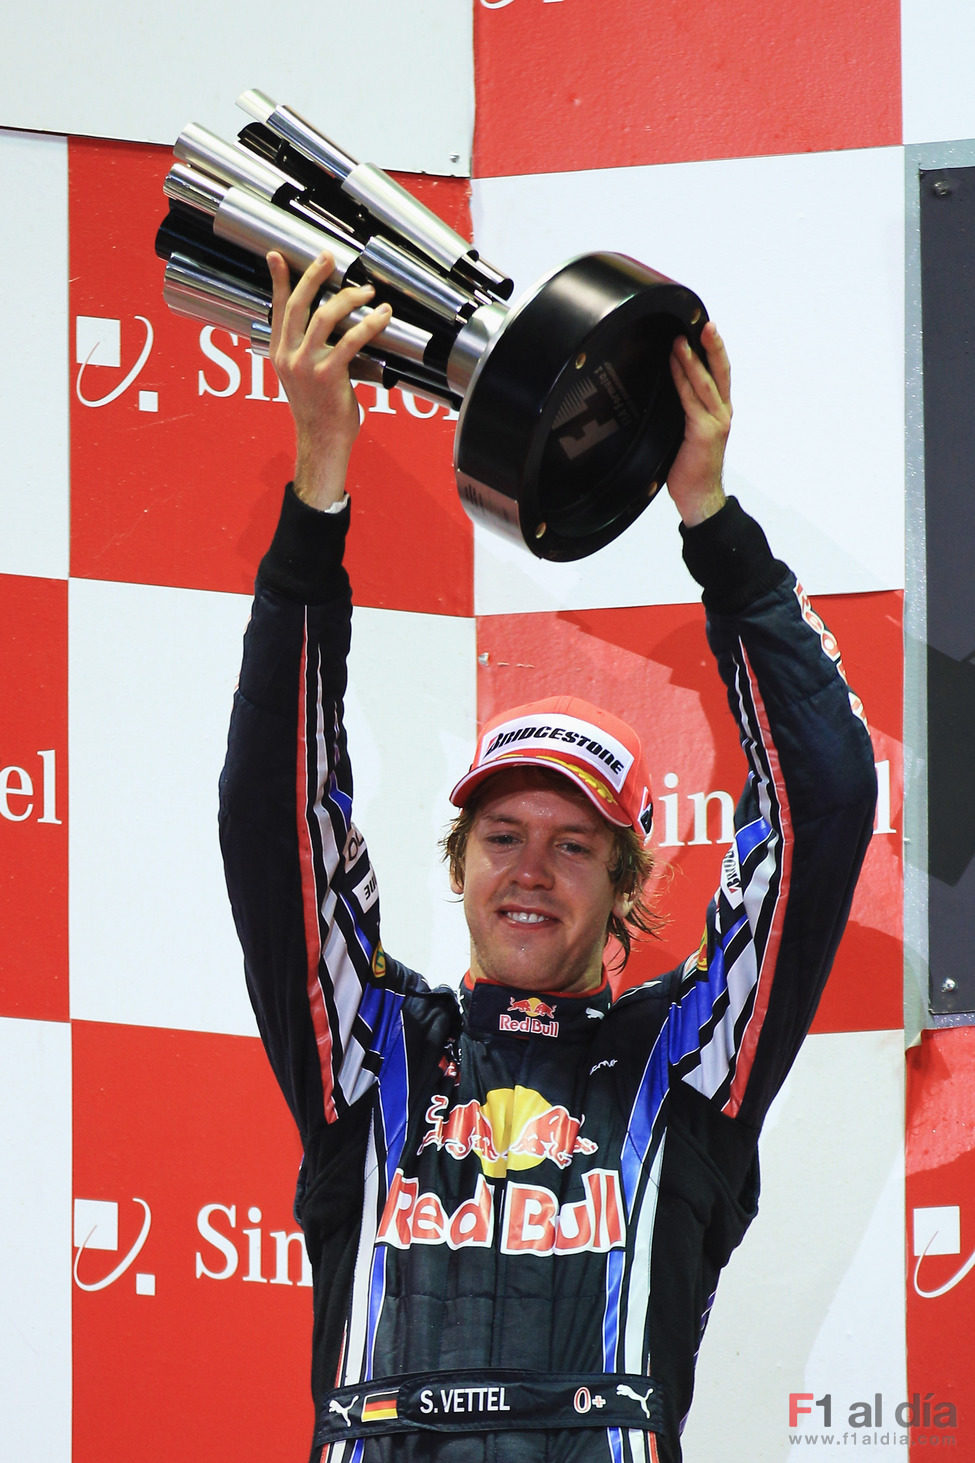 El trofeo de Vettel